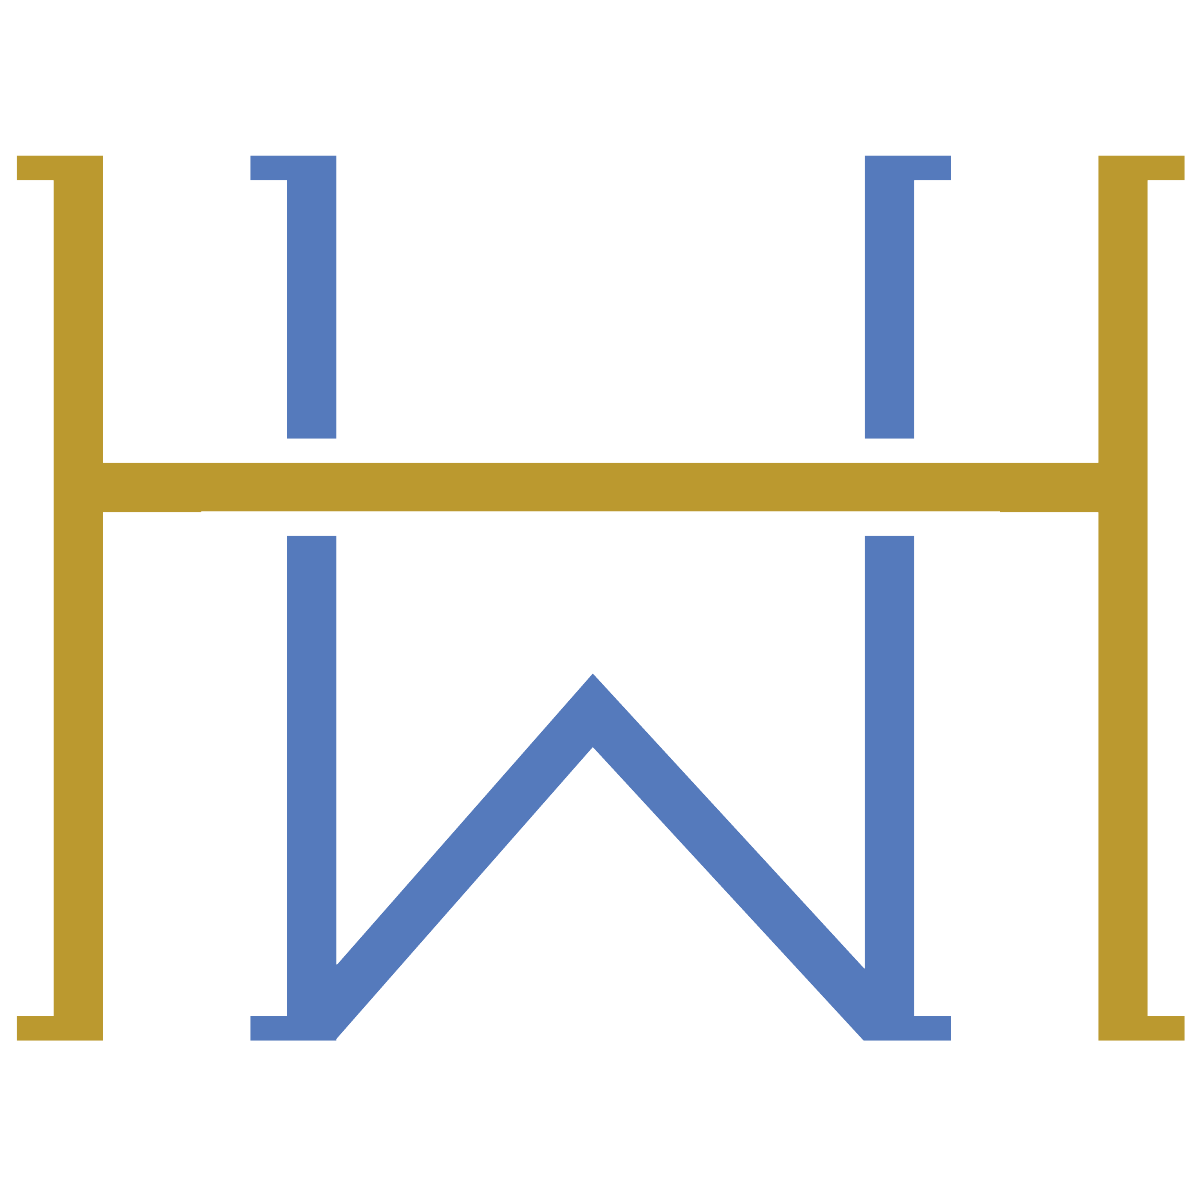 HollyWelch_Logos_HW icon only